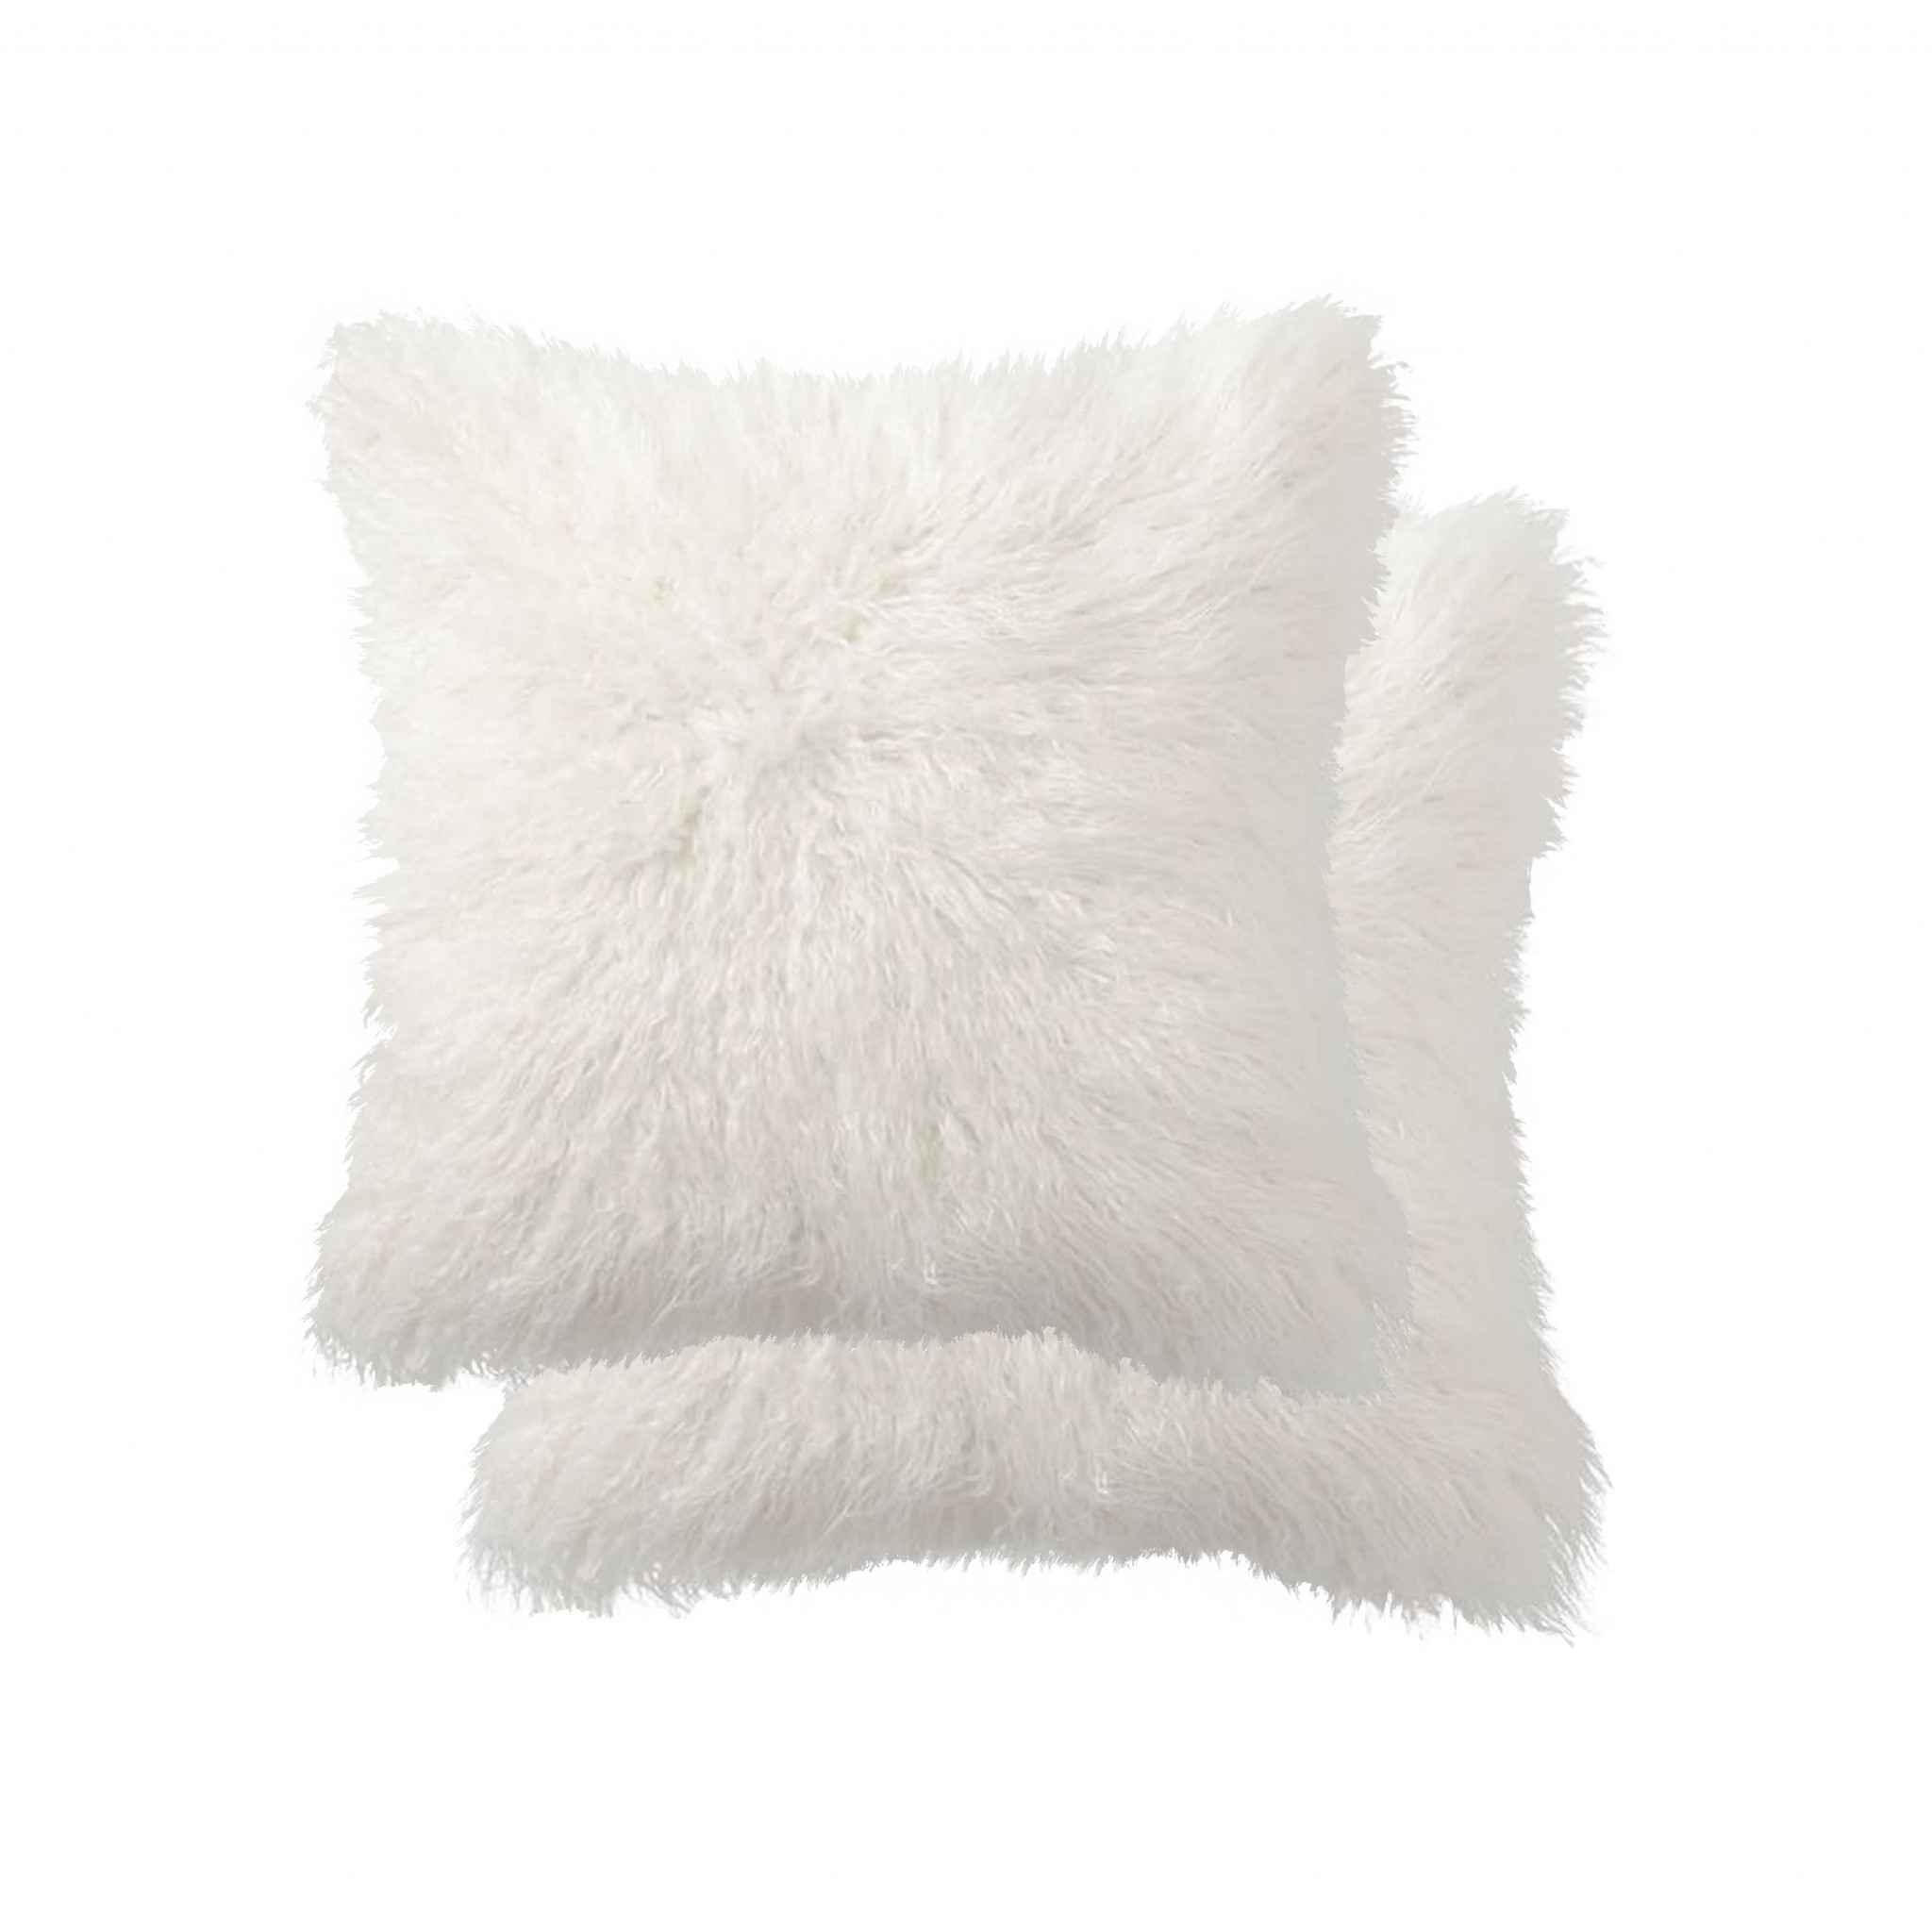 18" x 18" x 5" Off White, Faux Fur - Pillow 2-Pack